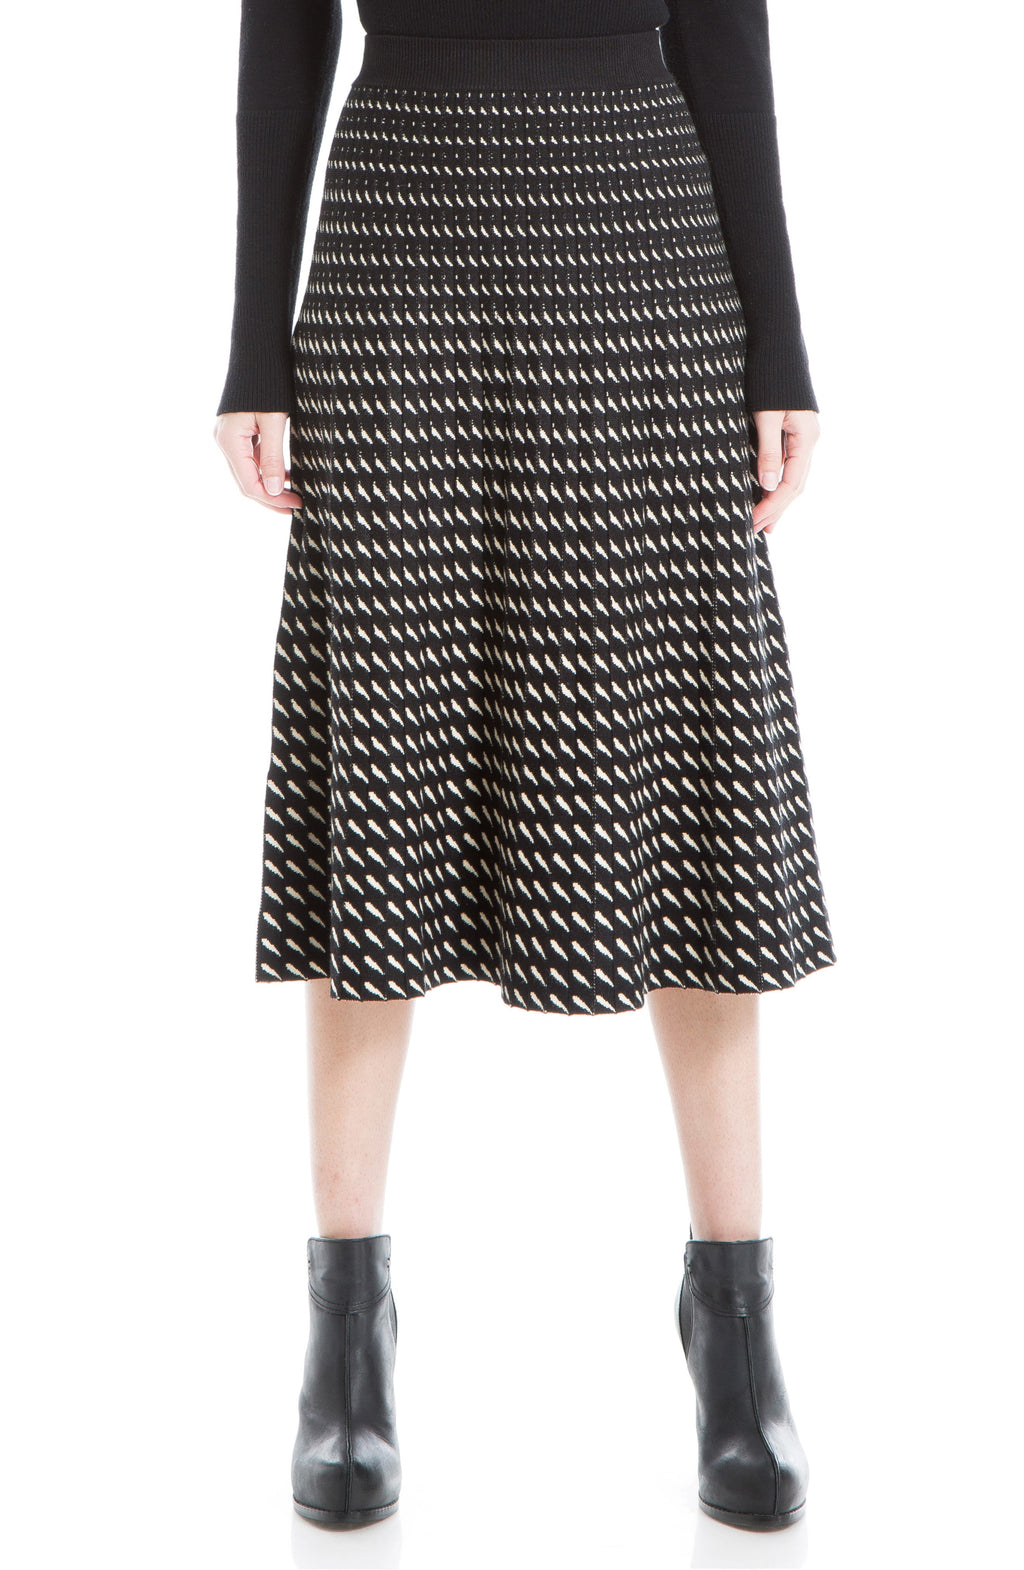 MAXSTUDIO Patterned Sweater Midi Skirt, Main, color, BLACK/ BONE RAIN STRIPE